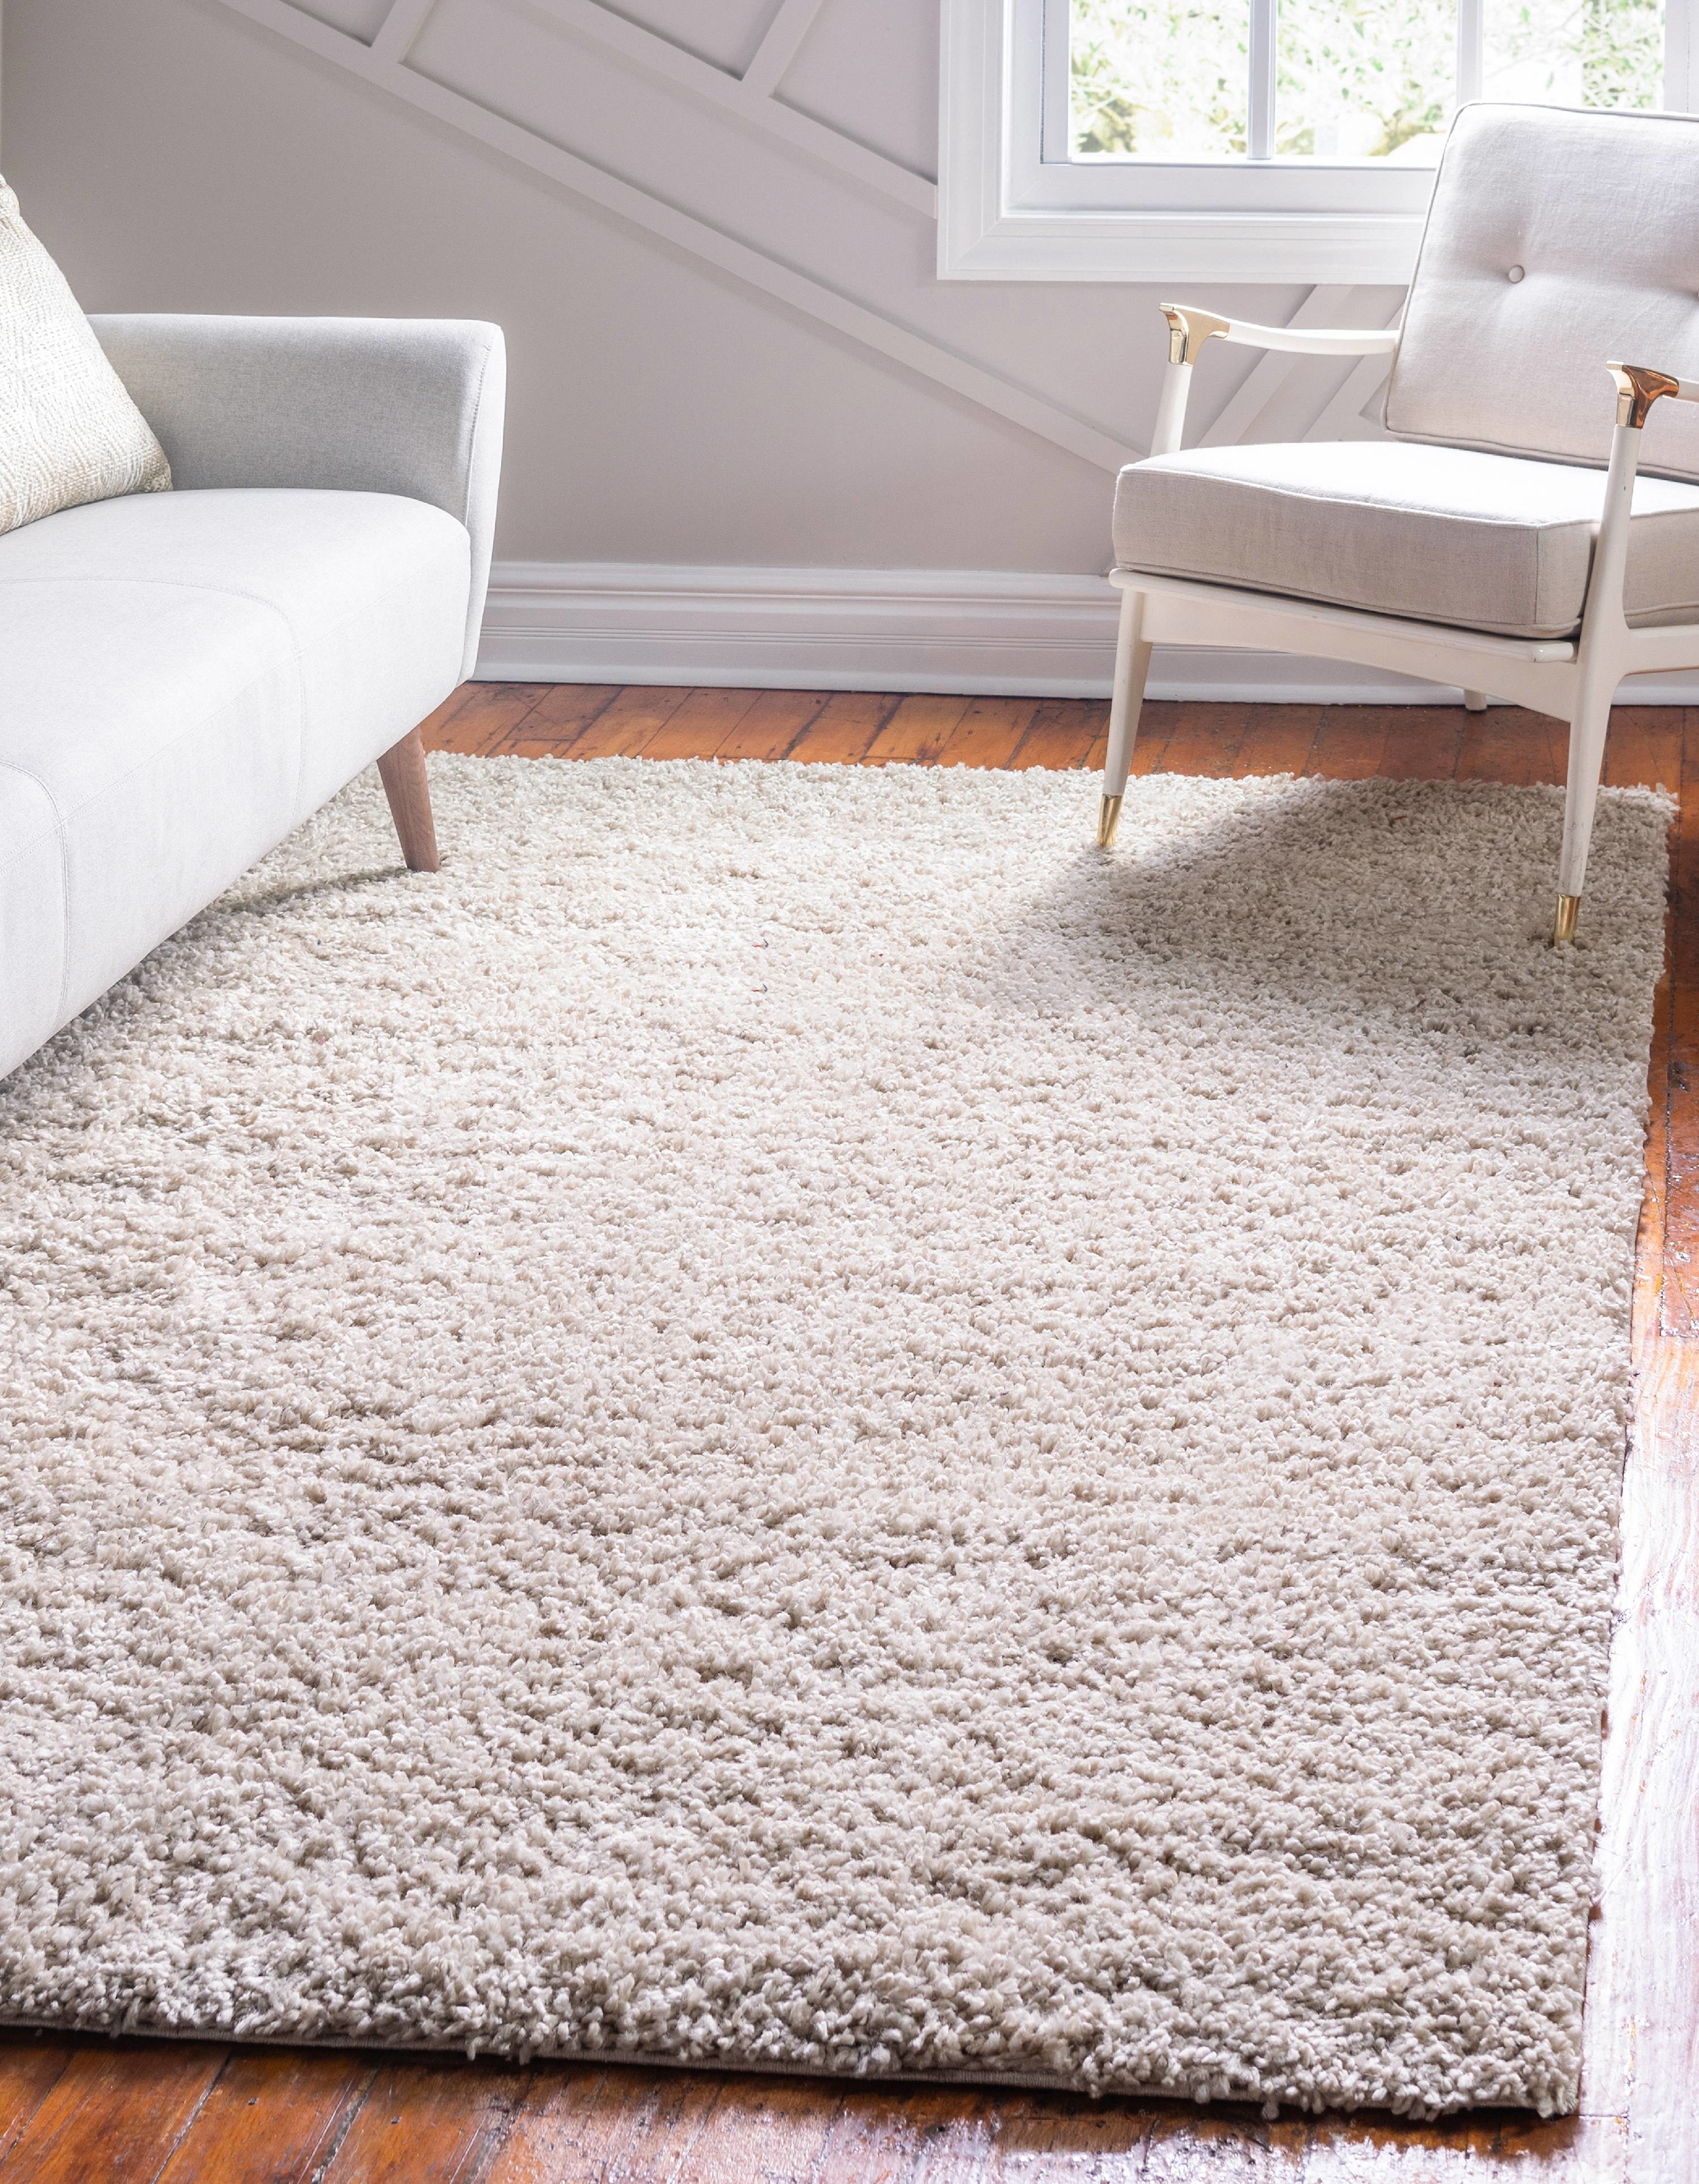 A beige area rug on hardwood floors in a living room